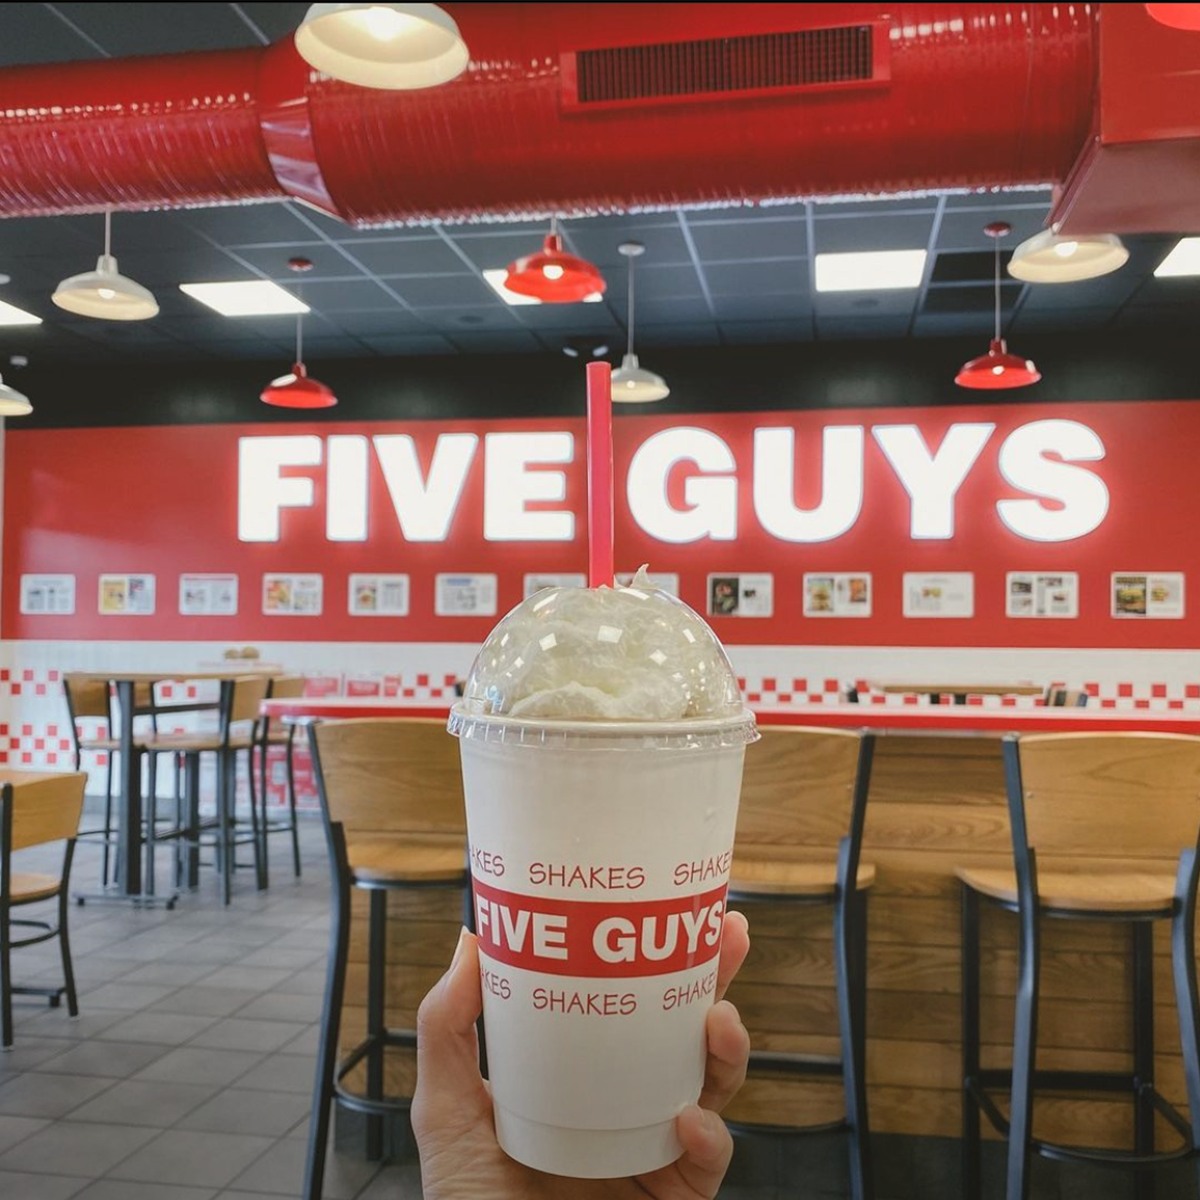 Five guys shake from the five Guys menu